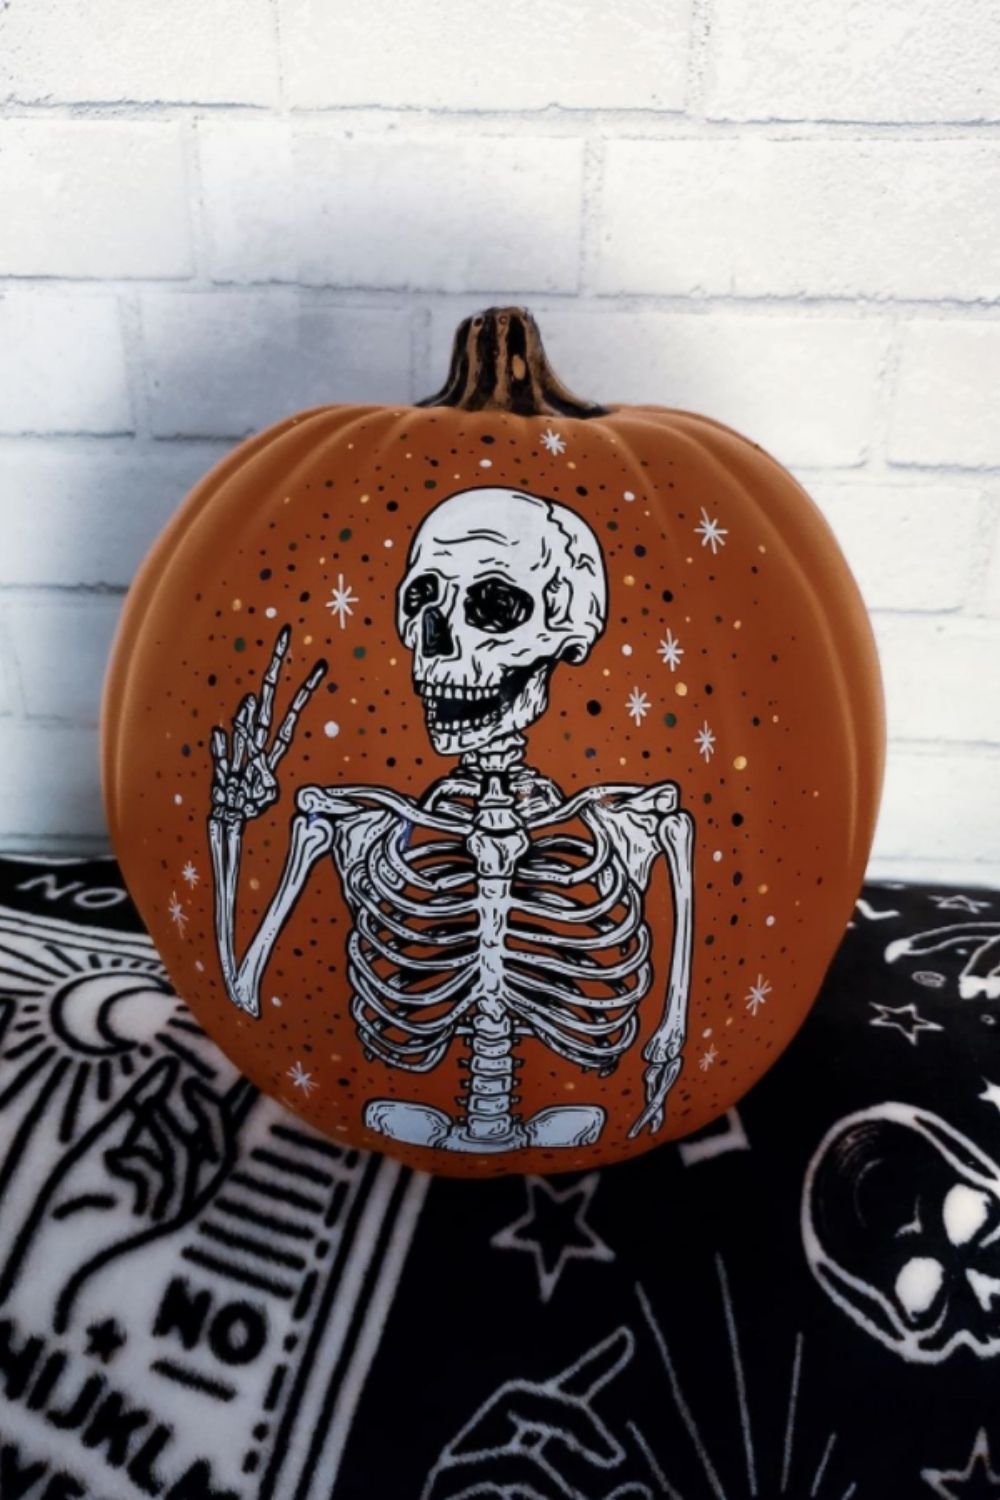 Skull and bone pumpkin painting